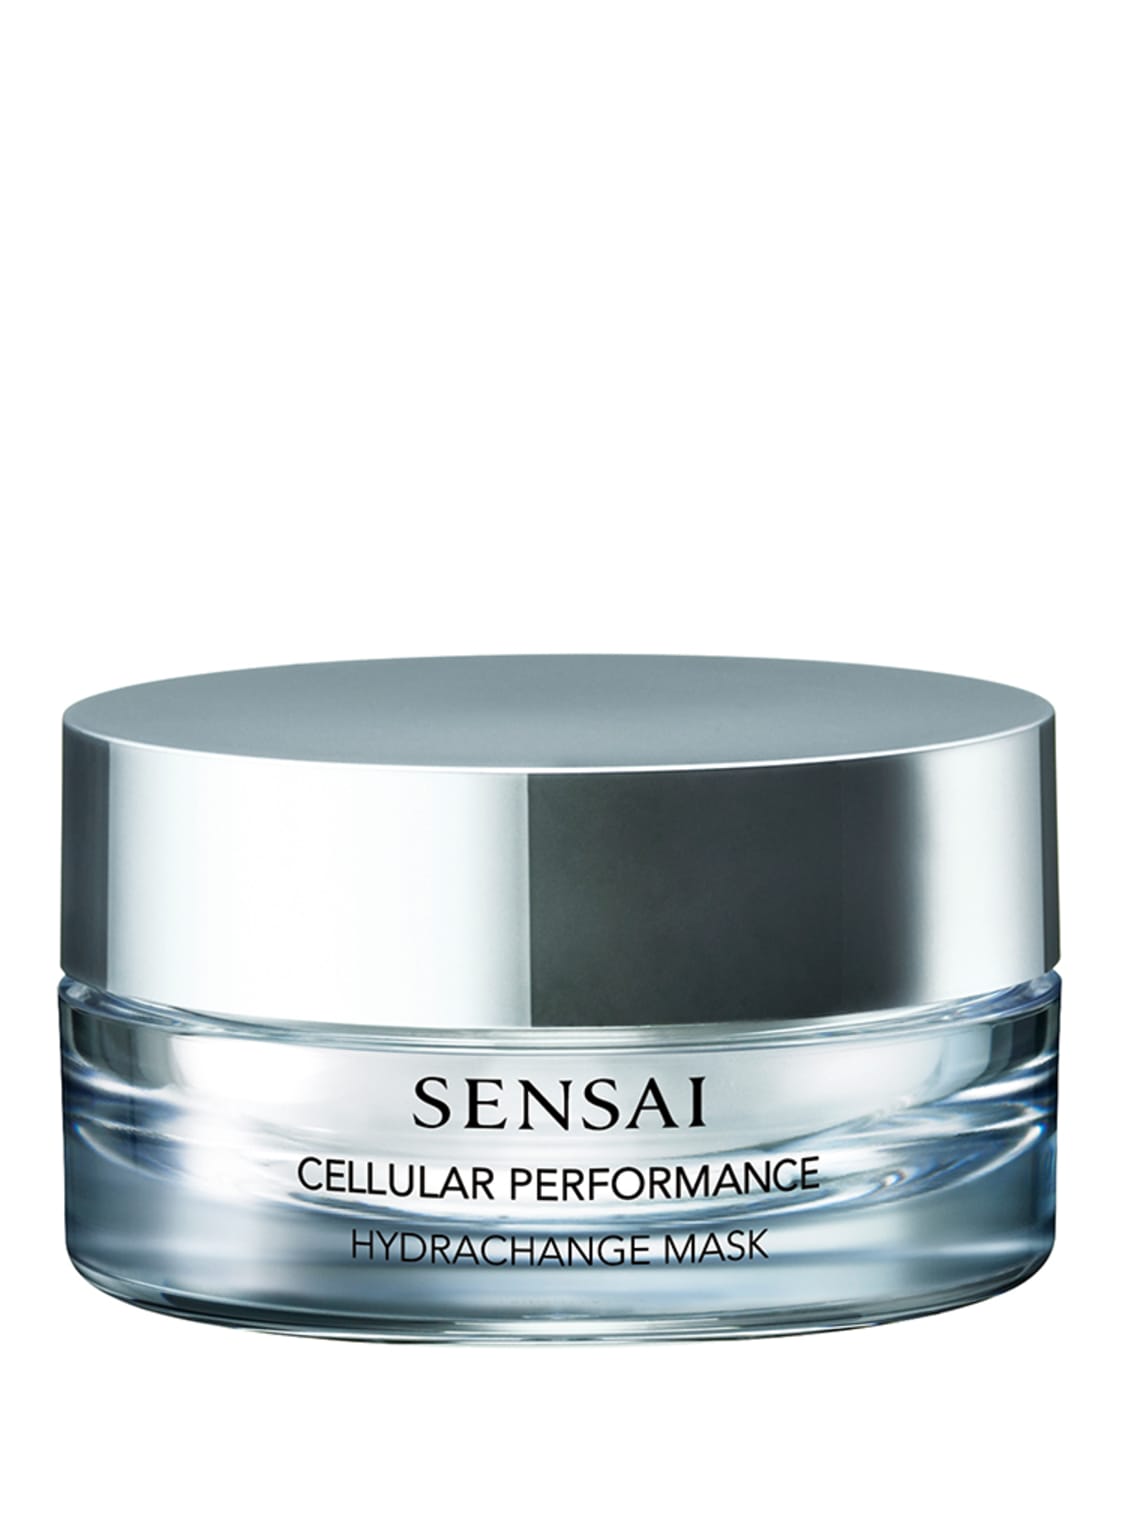 Sensai Cellular Performance Hydrachange Mask 75 ml von Sensai